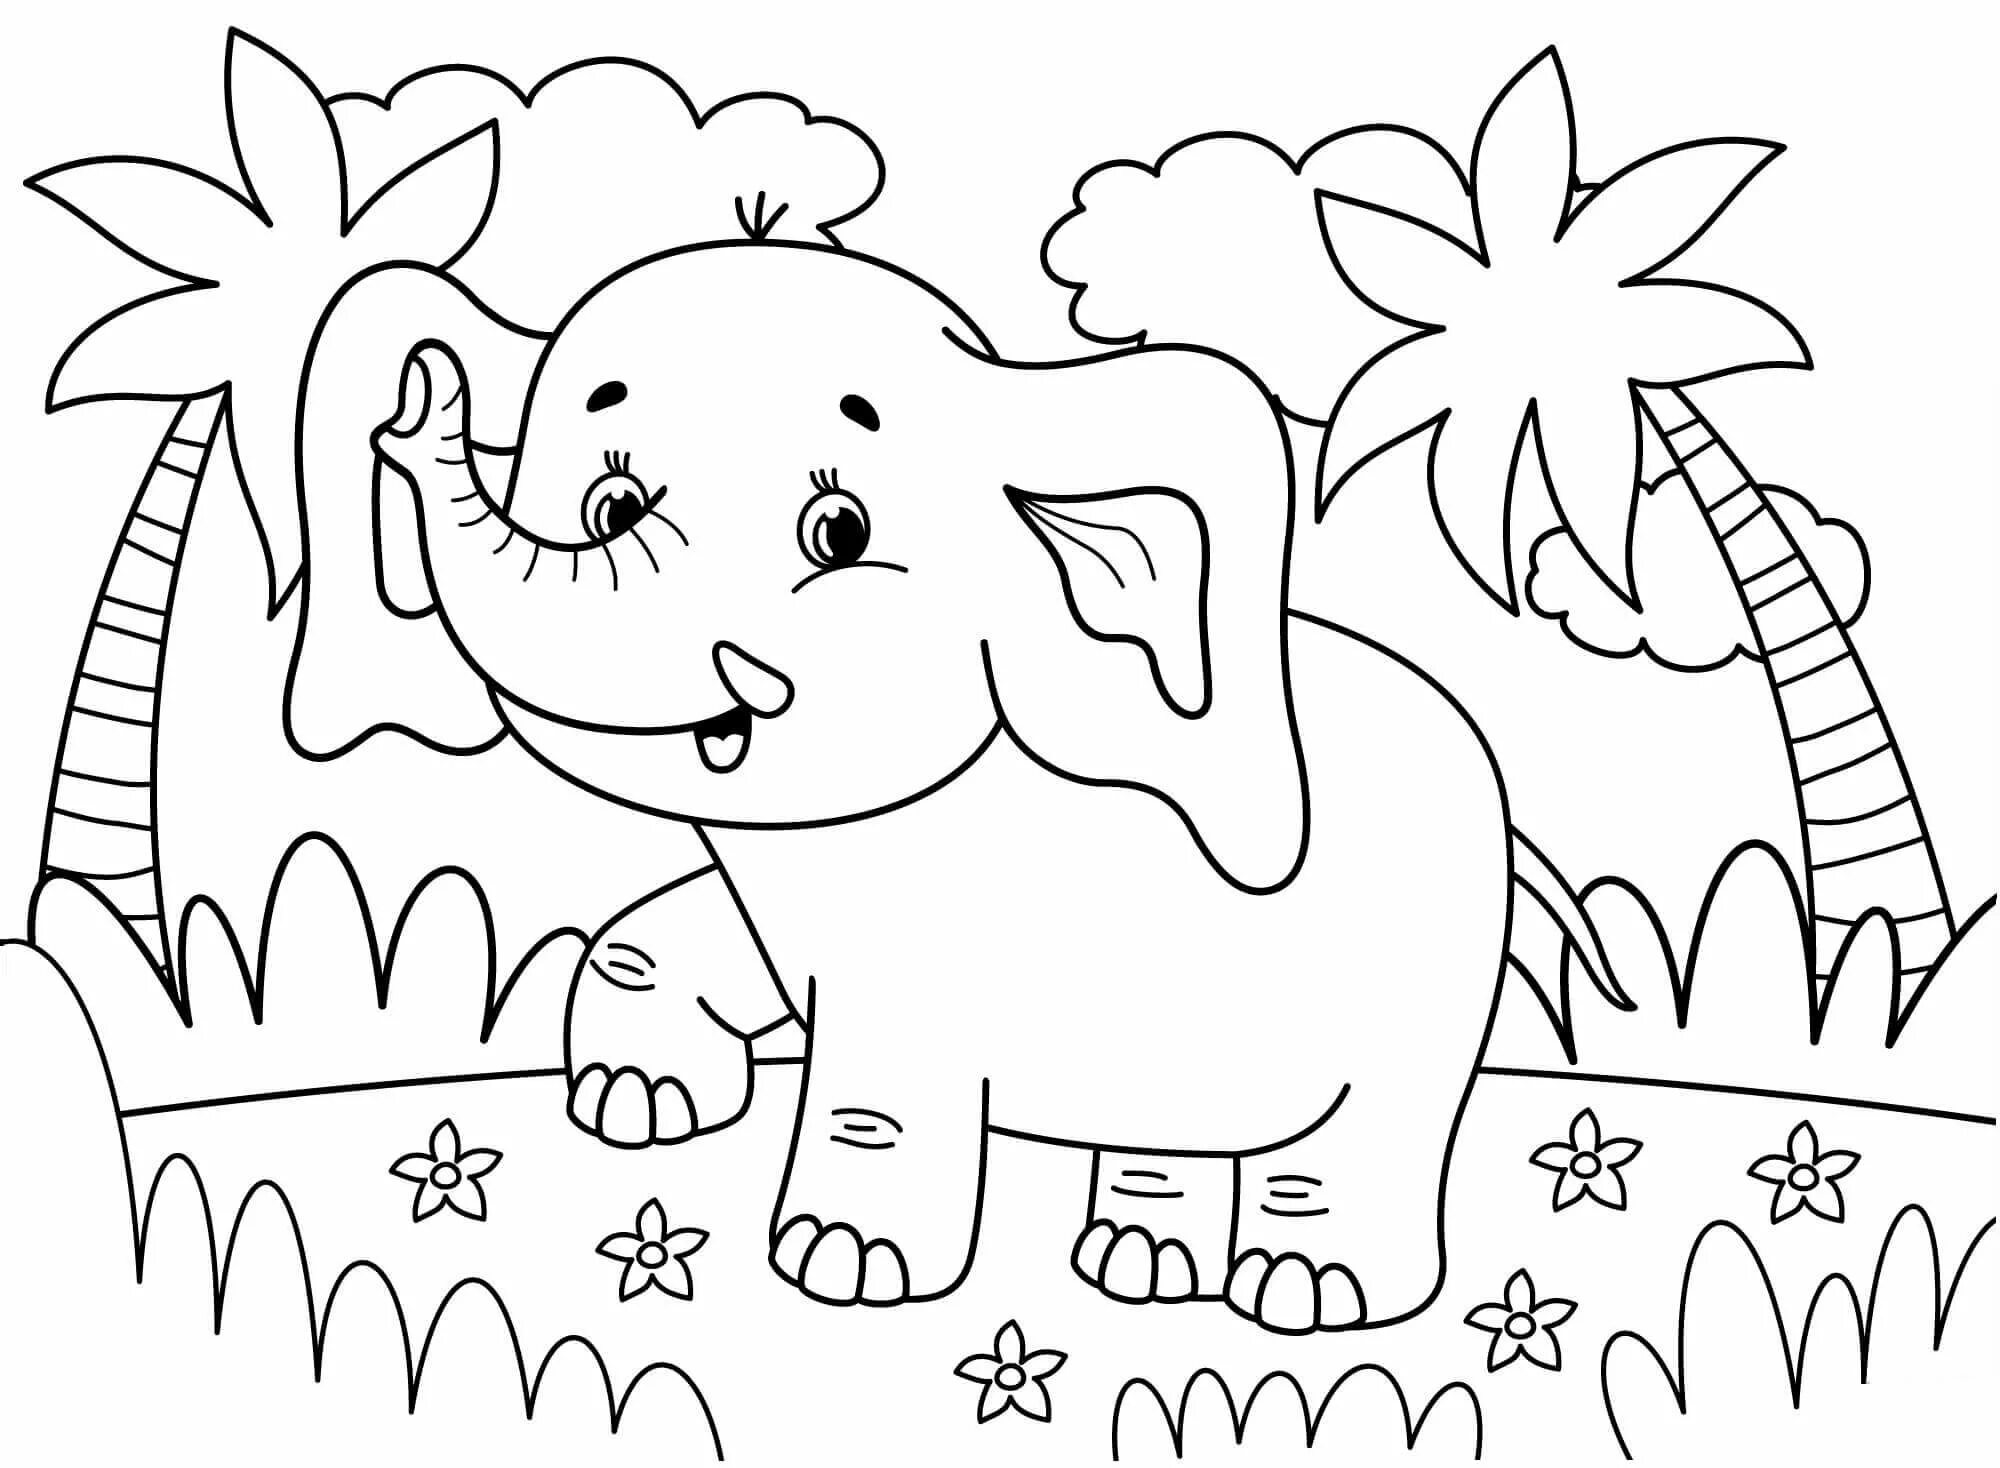 Fantastic elephant game page